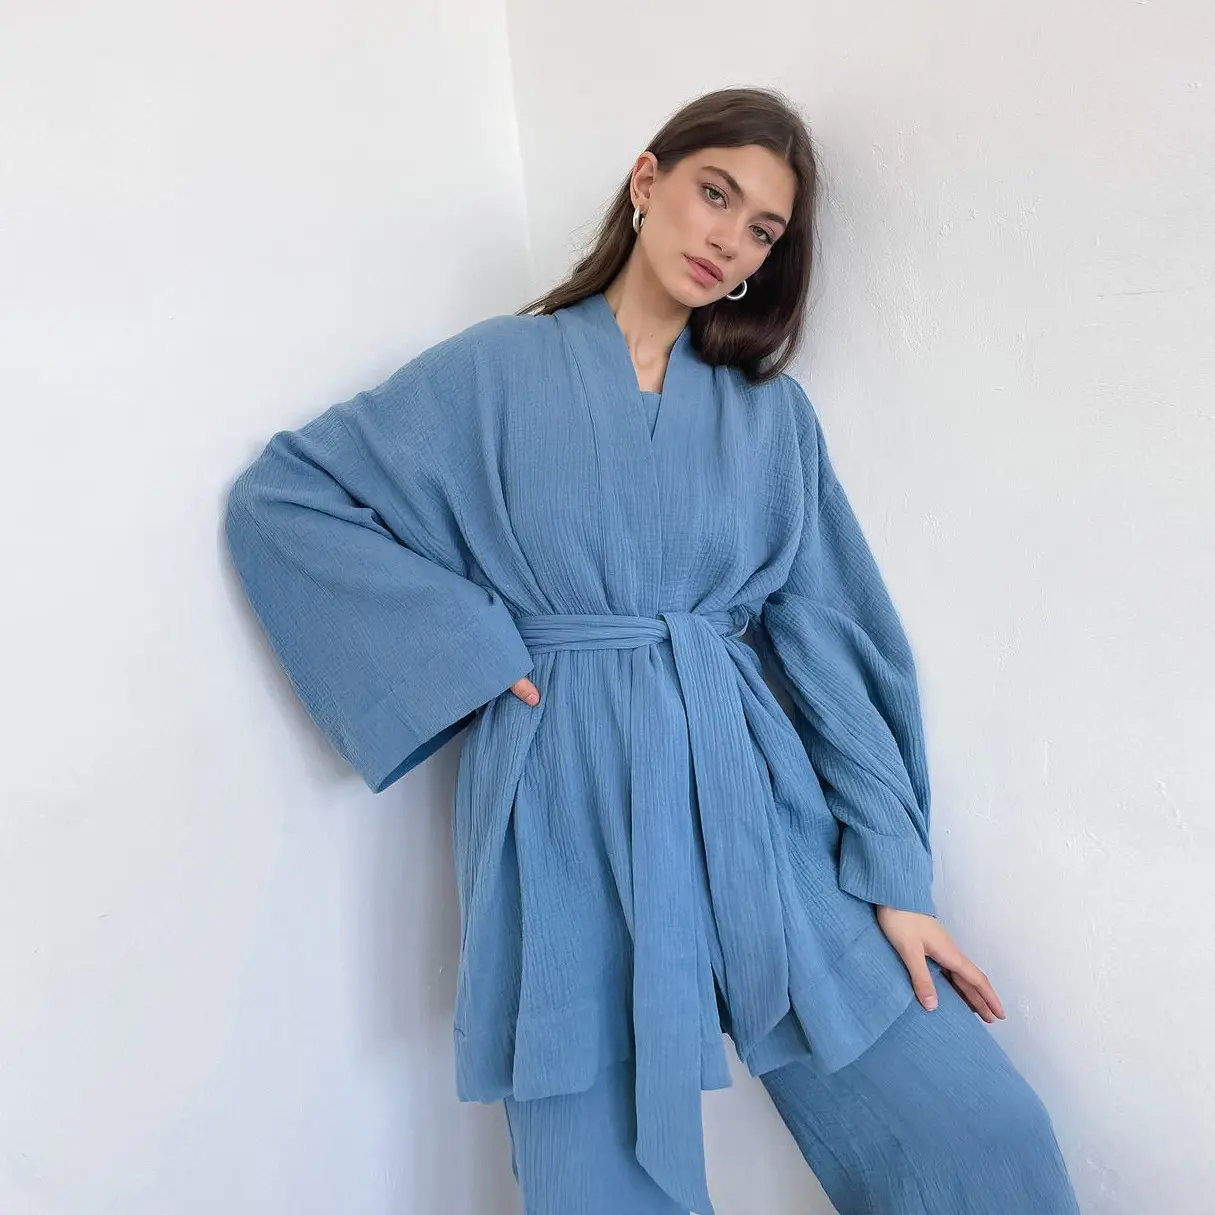 Enyami S-XL Cozy Casual Loose Robe Wrap Tops Pants Sleepwear 100% Muslin Double Gauze Cotton Women Pajamas Co Ords Sets